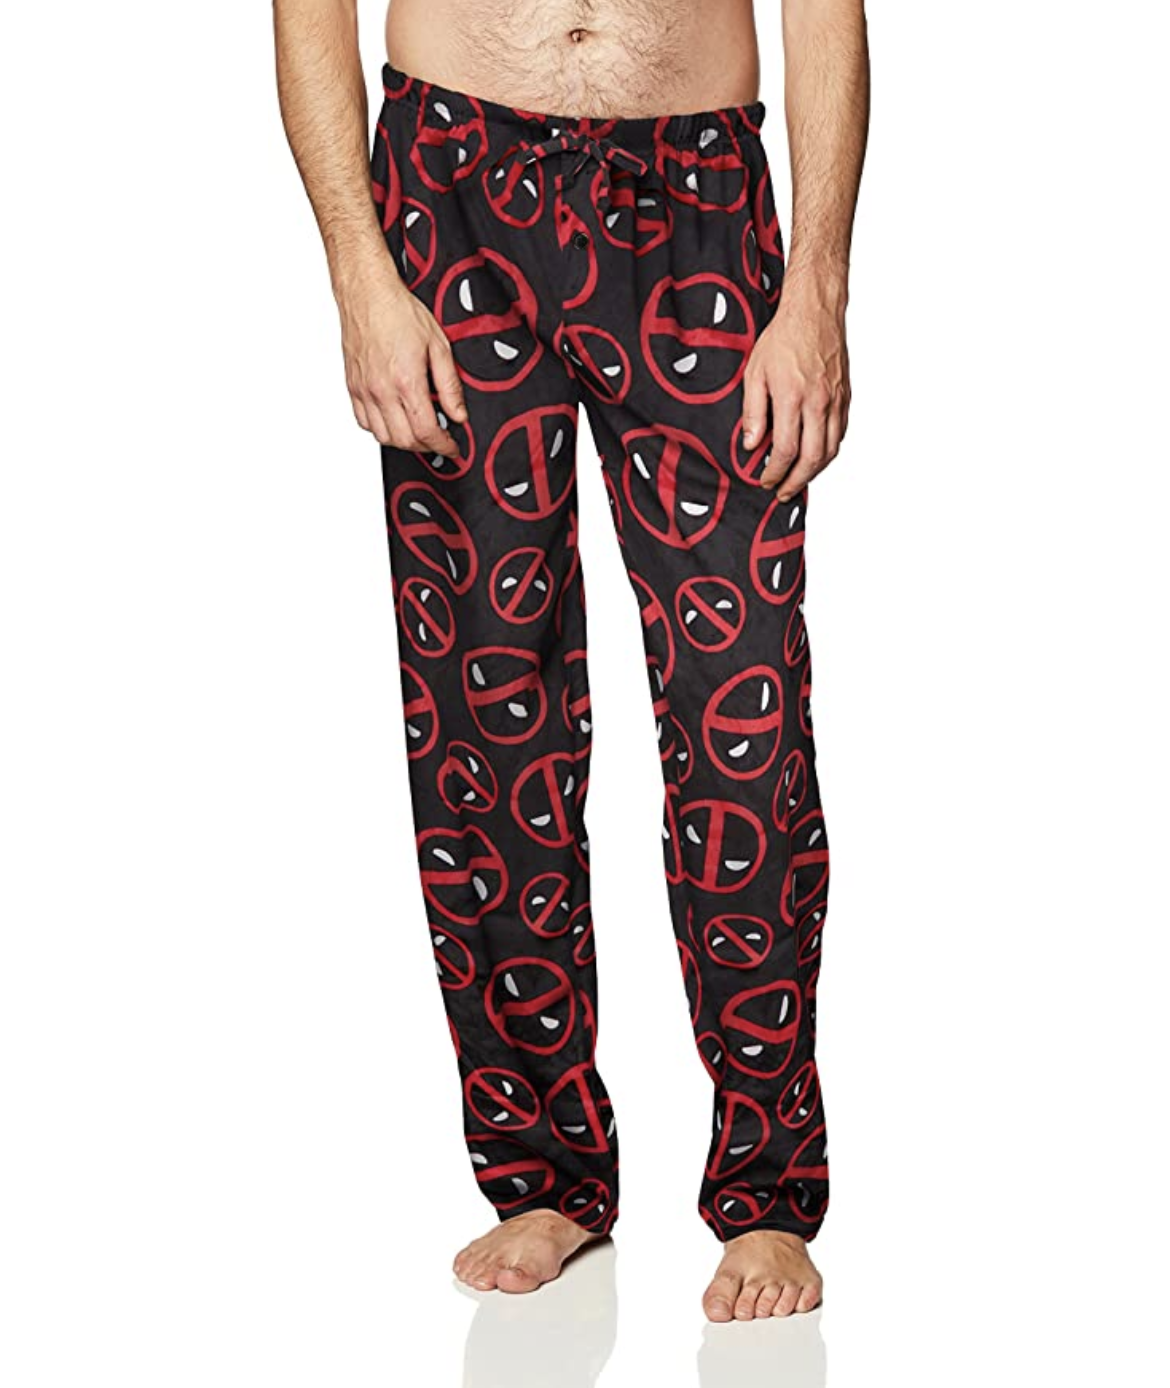 pantalones de pijamas con la imagen de Deadpool